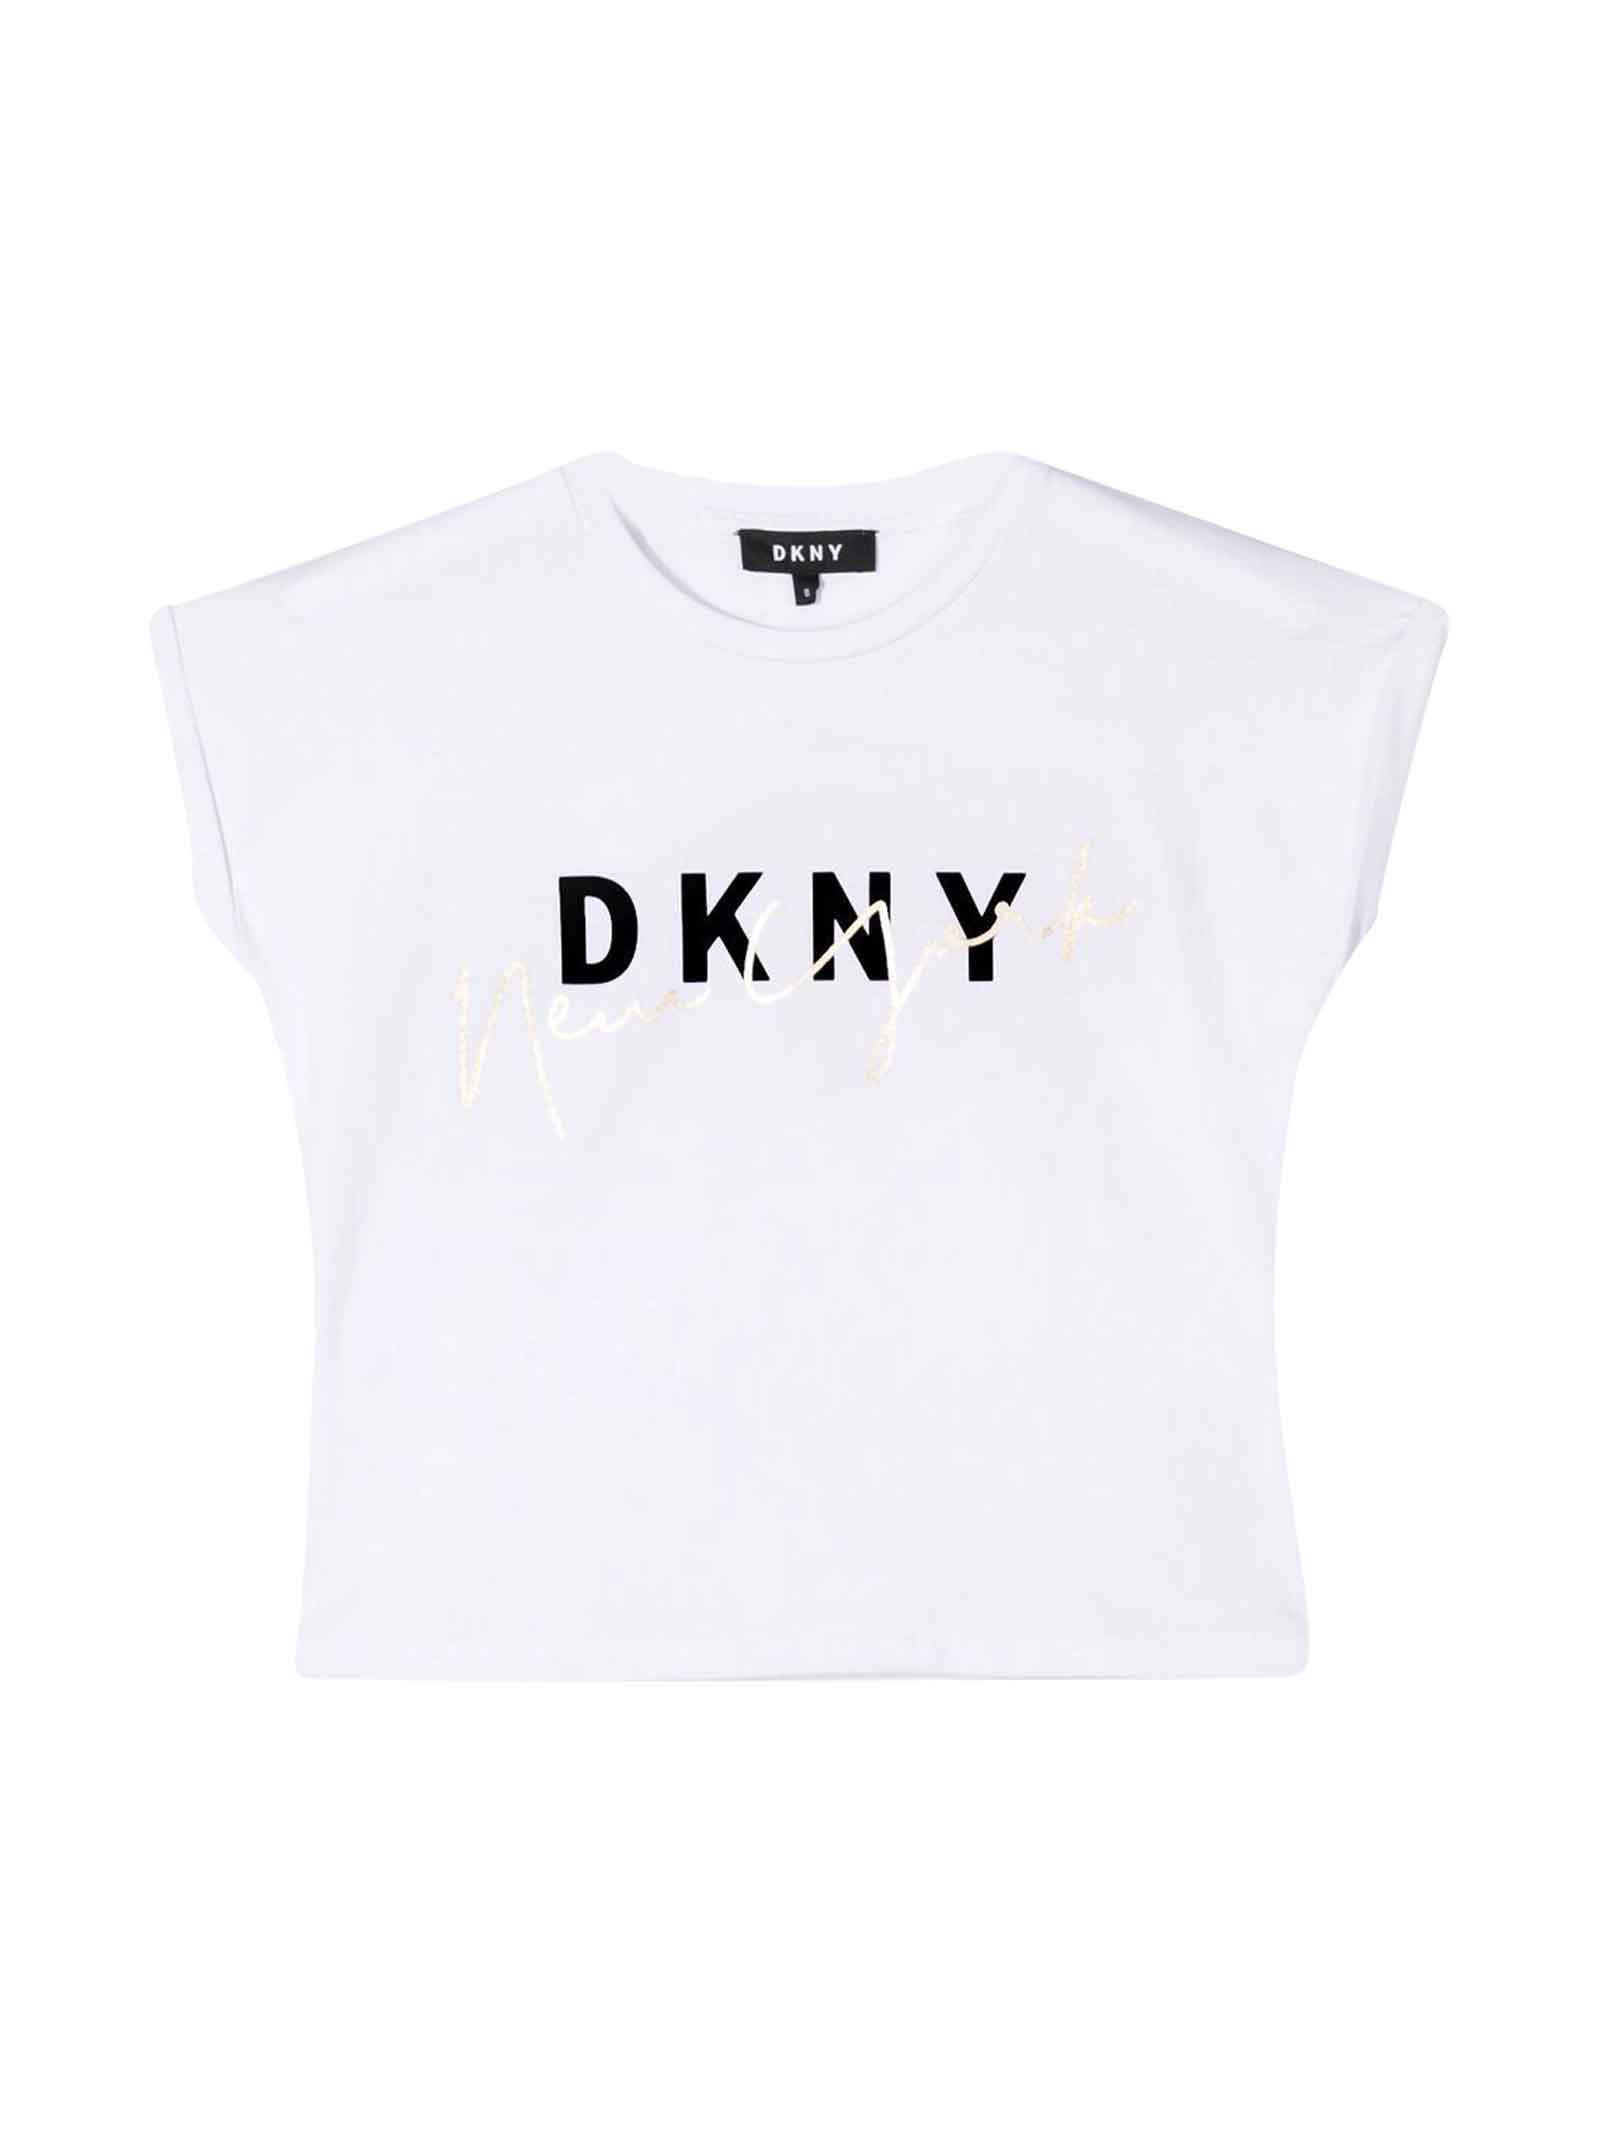 DKNY White T-shirt Unisex